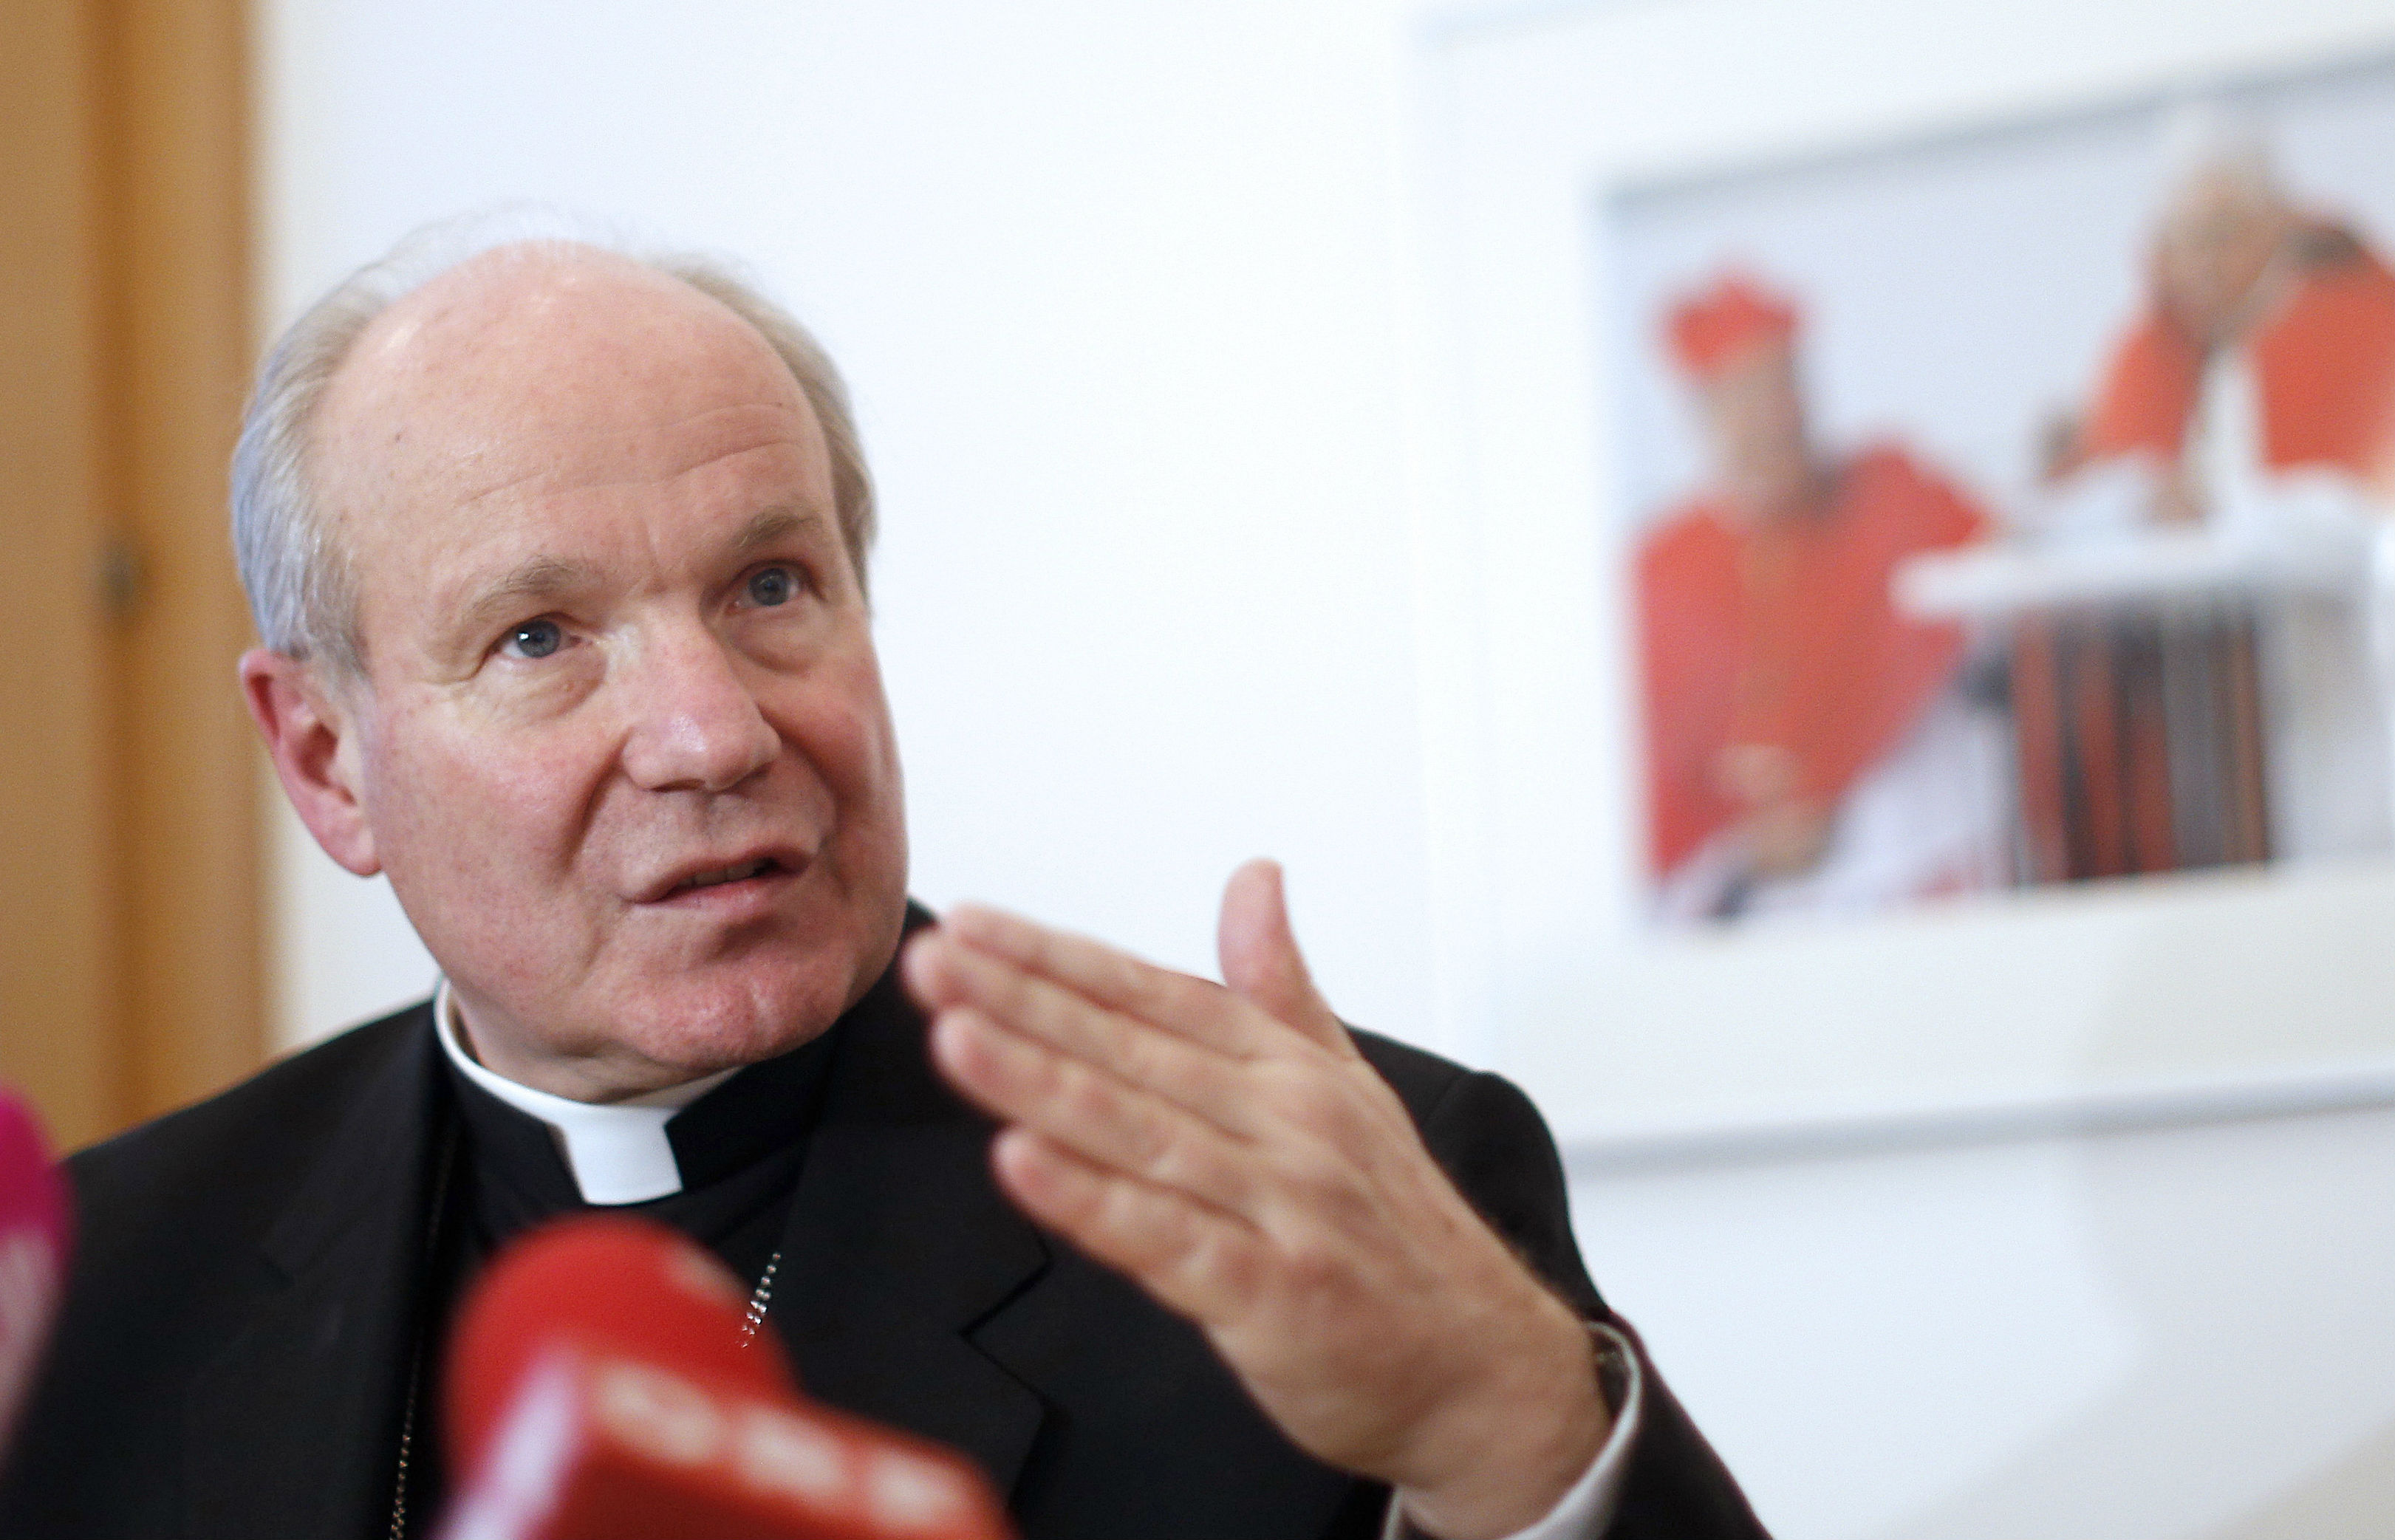 Schönborn defends EU as ‘unprecedented model for peace’